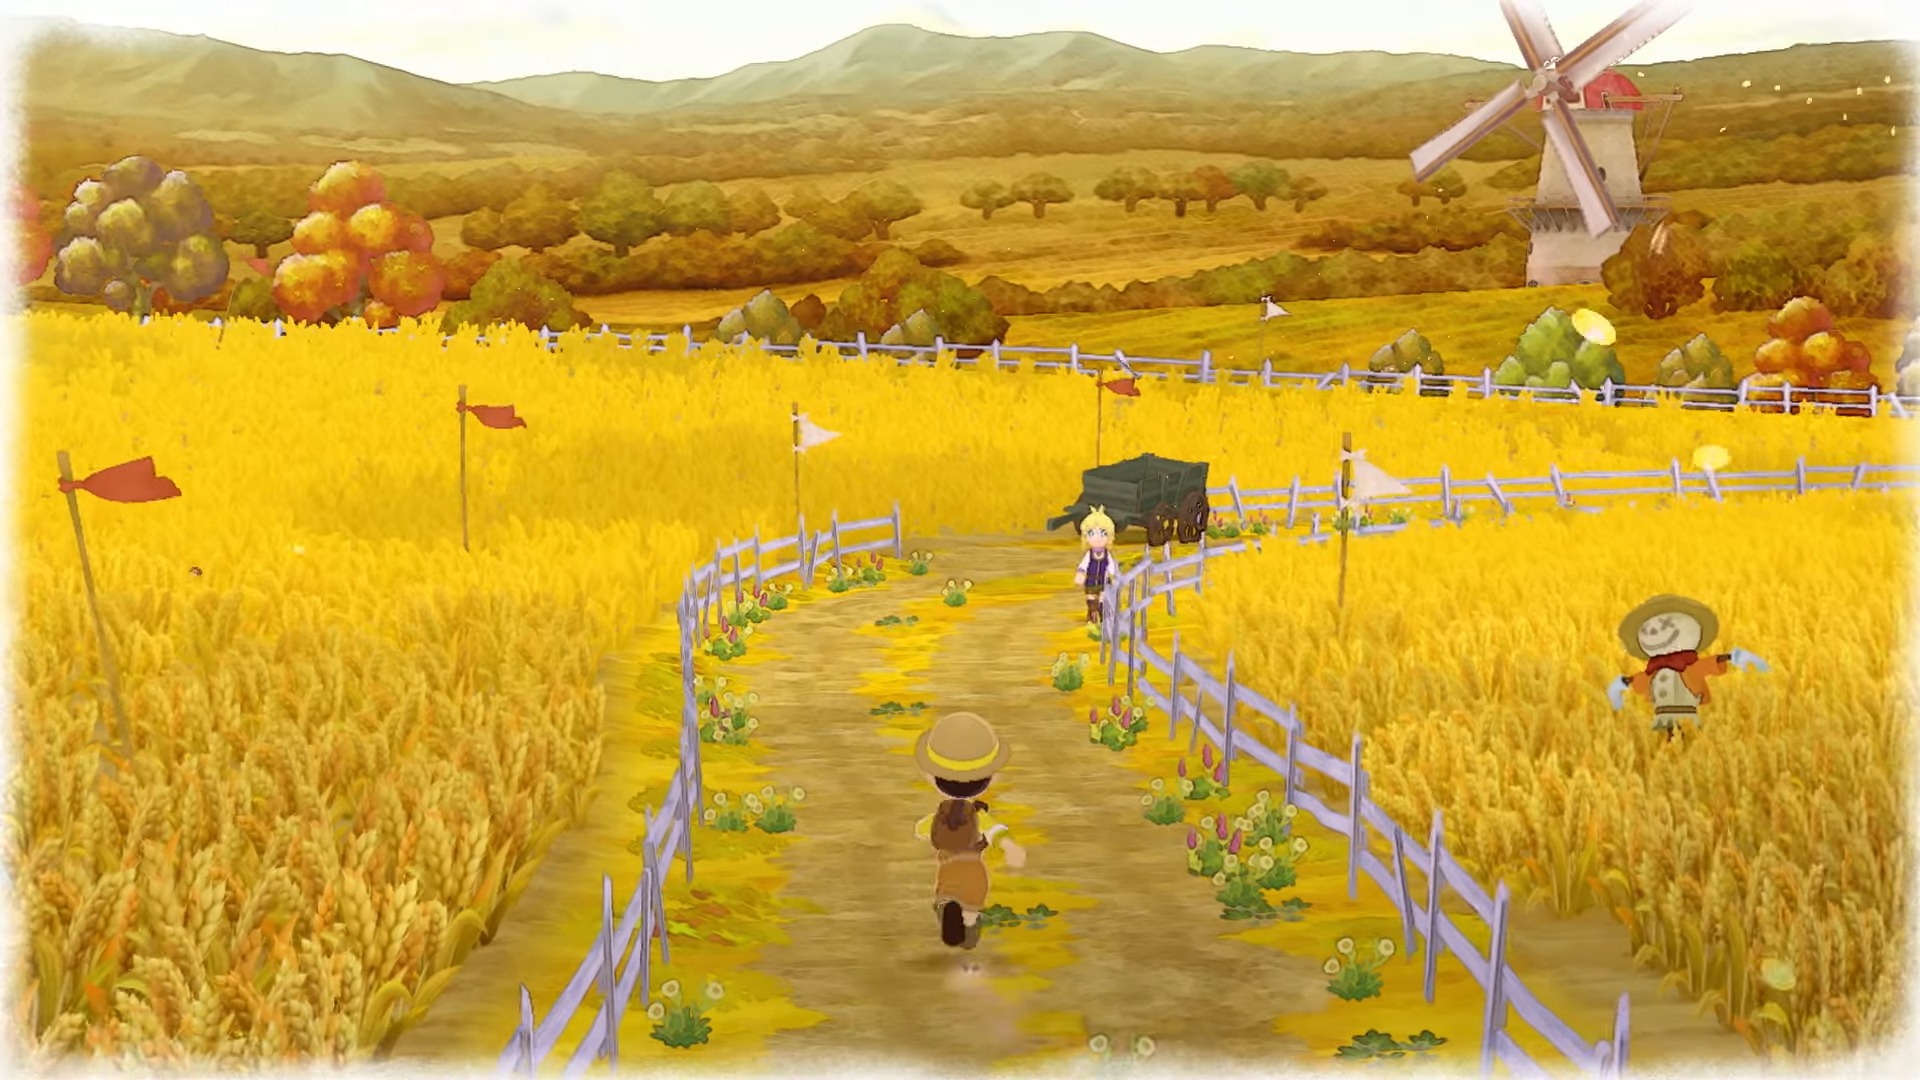 Doraemon of Seasons: Friends of the Kingdom this November in Japan, new trailer